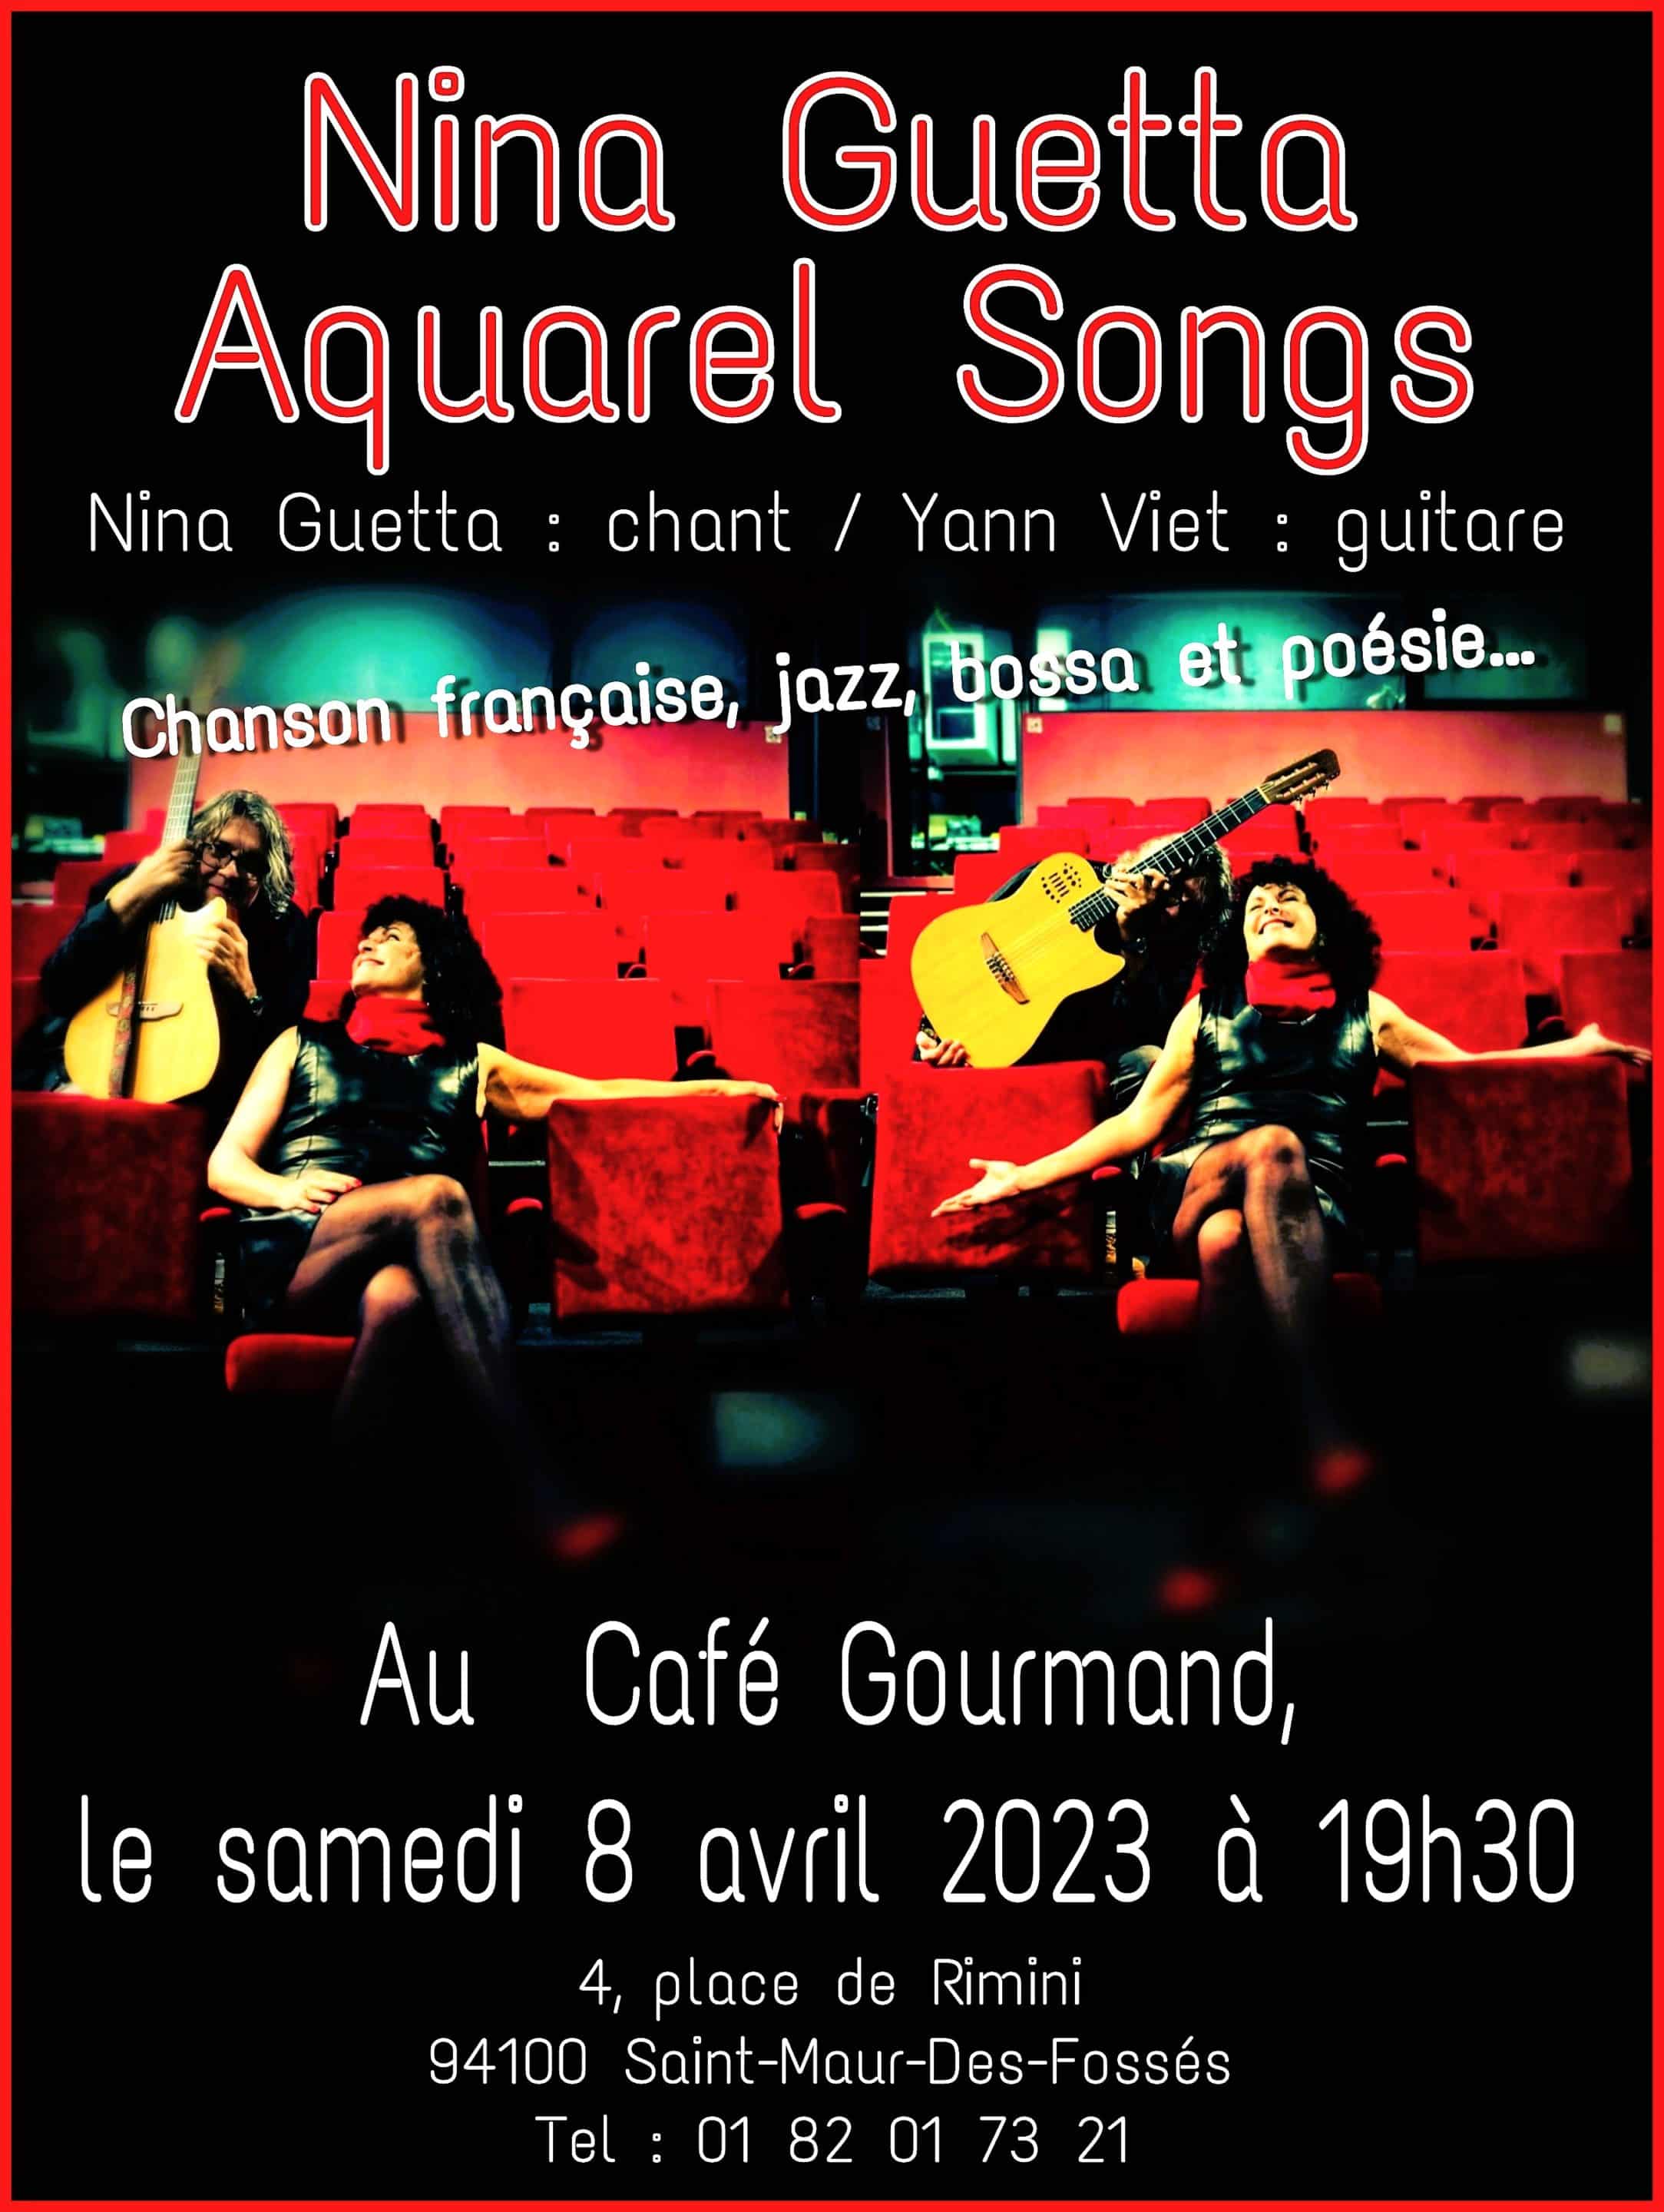 Concert at the Café Gourmand restaurant in Saint Maur, Saturday 8.04.23 from 7.30 p.m. – Chanson française